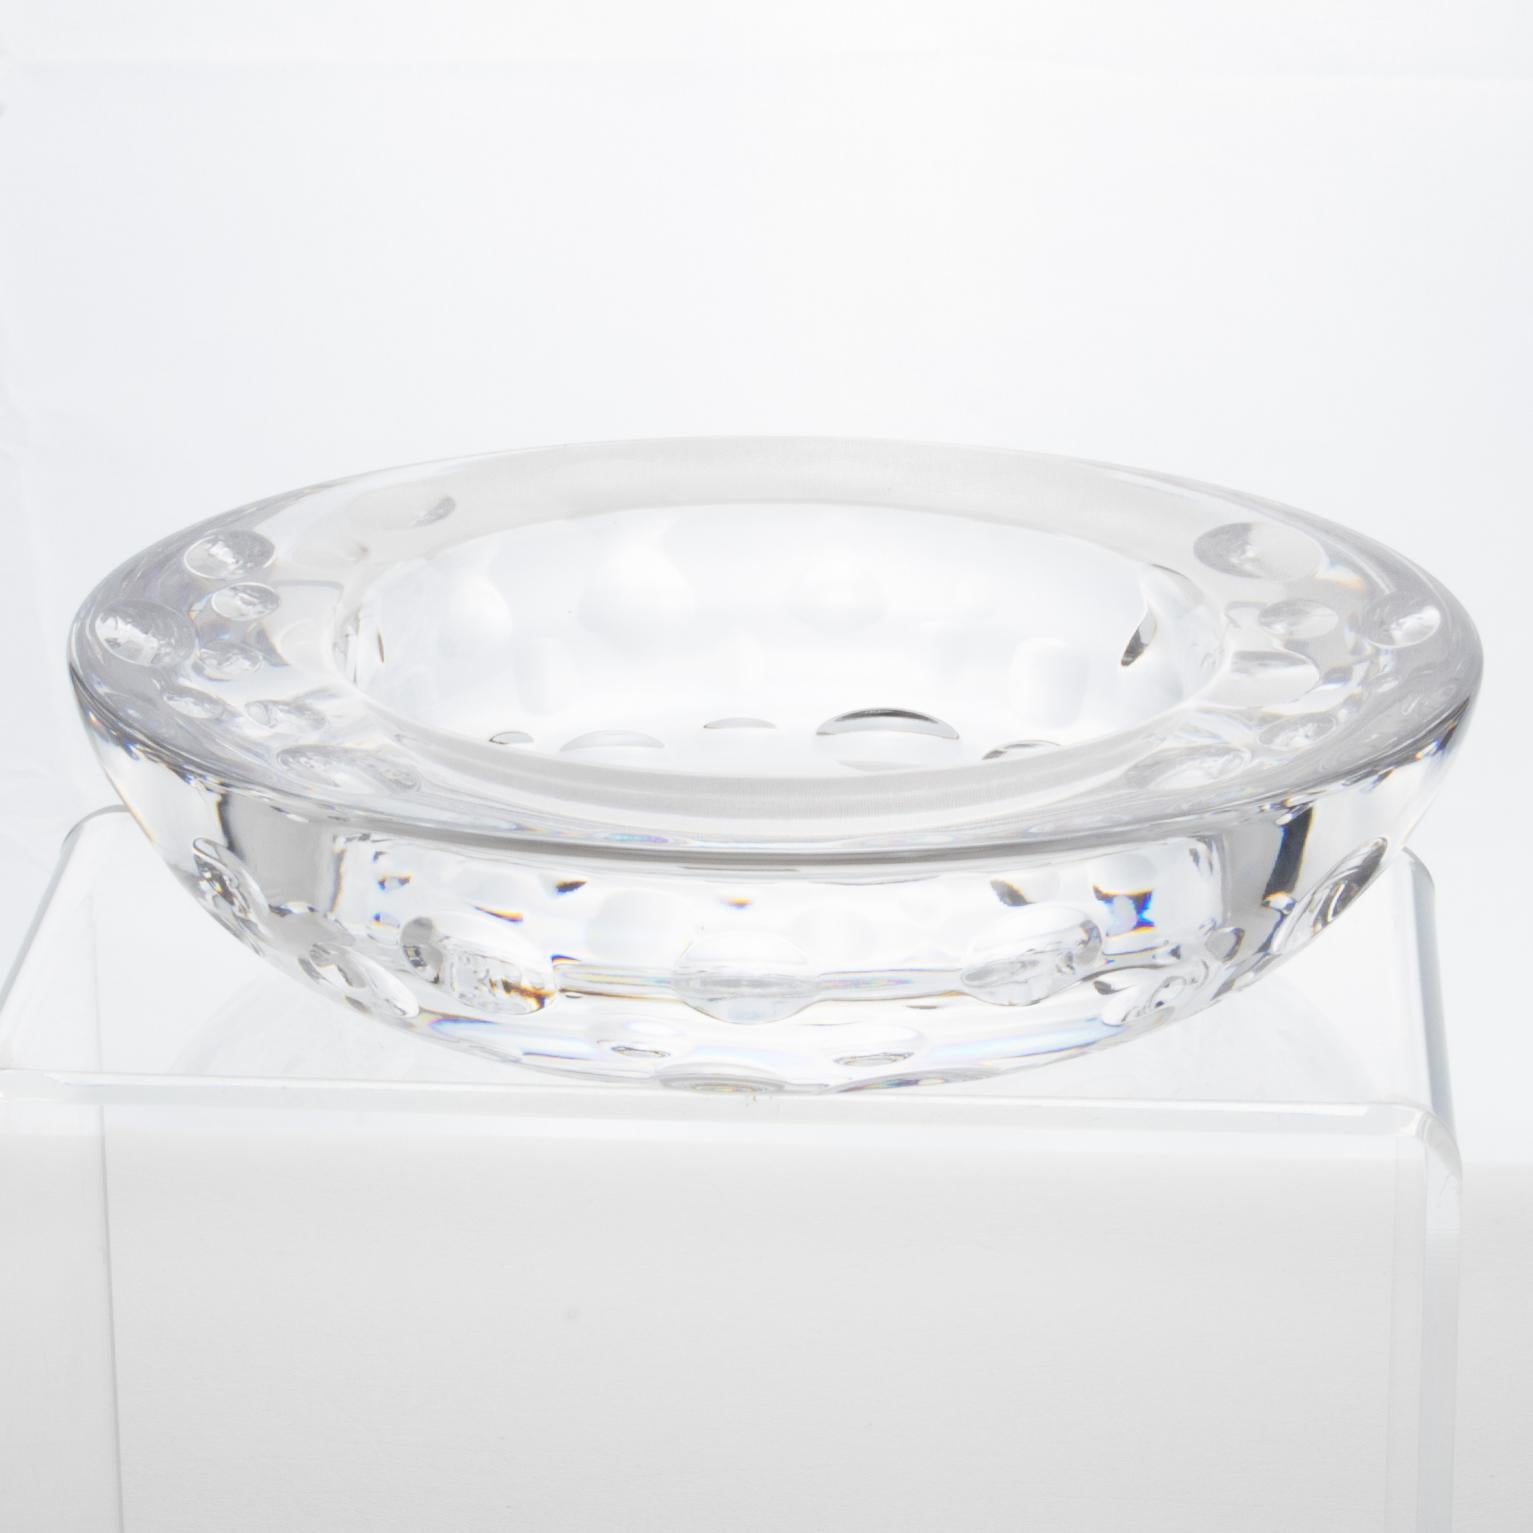 Christian Dior Crystal Cigar Ashtray Bowl Dish Catchall Desk Tidy 1